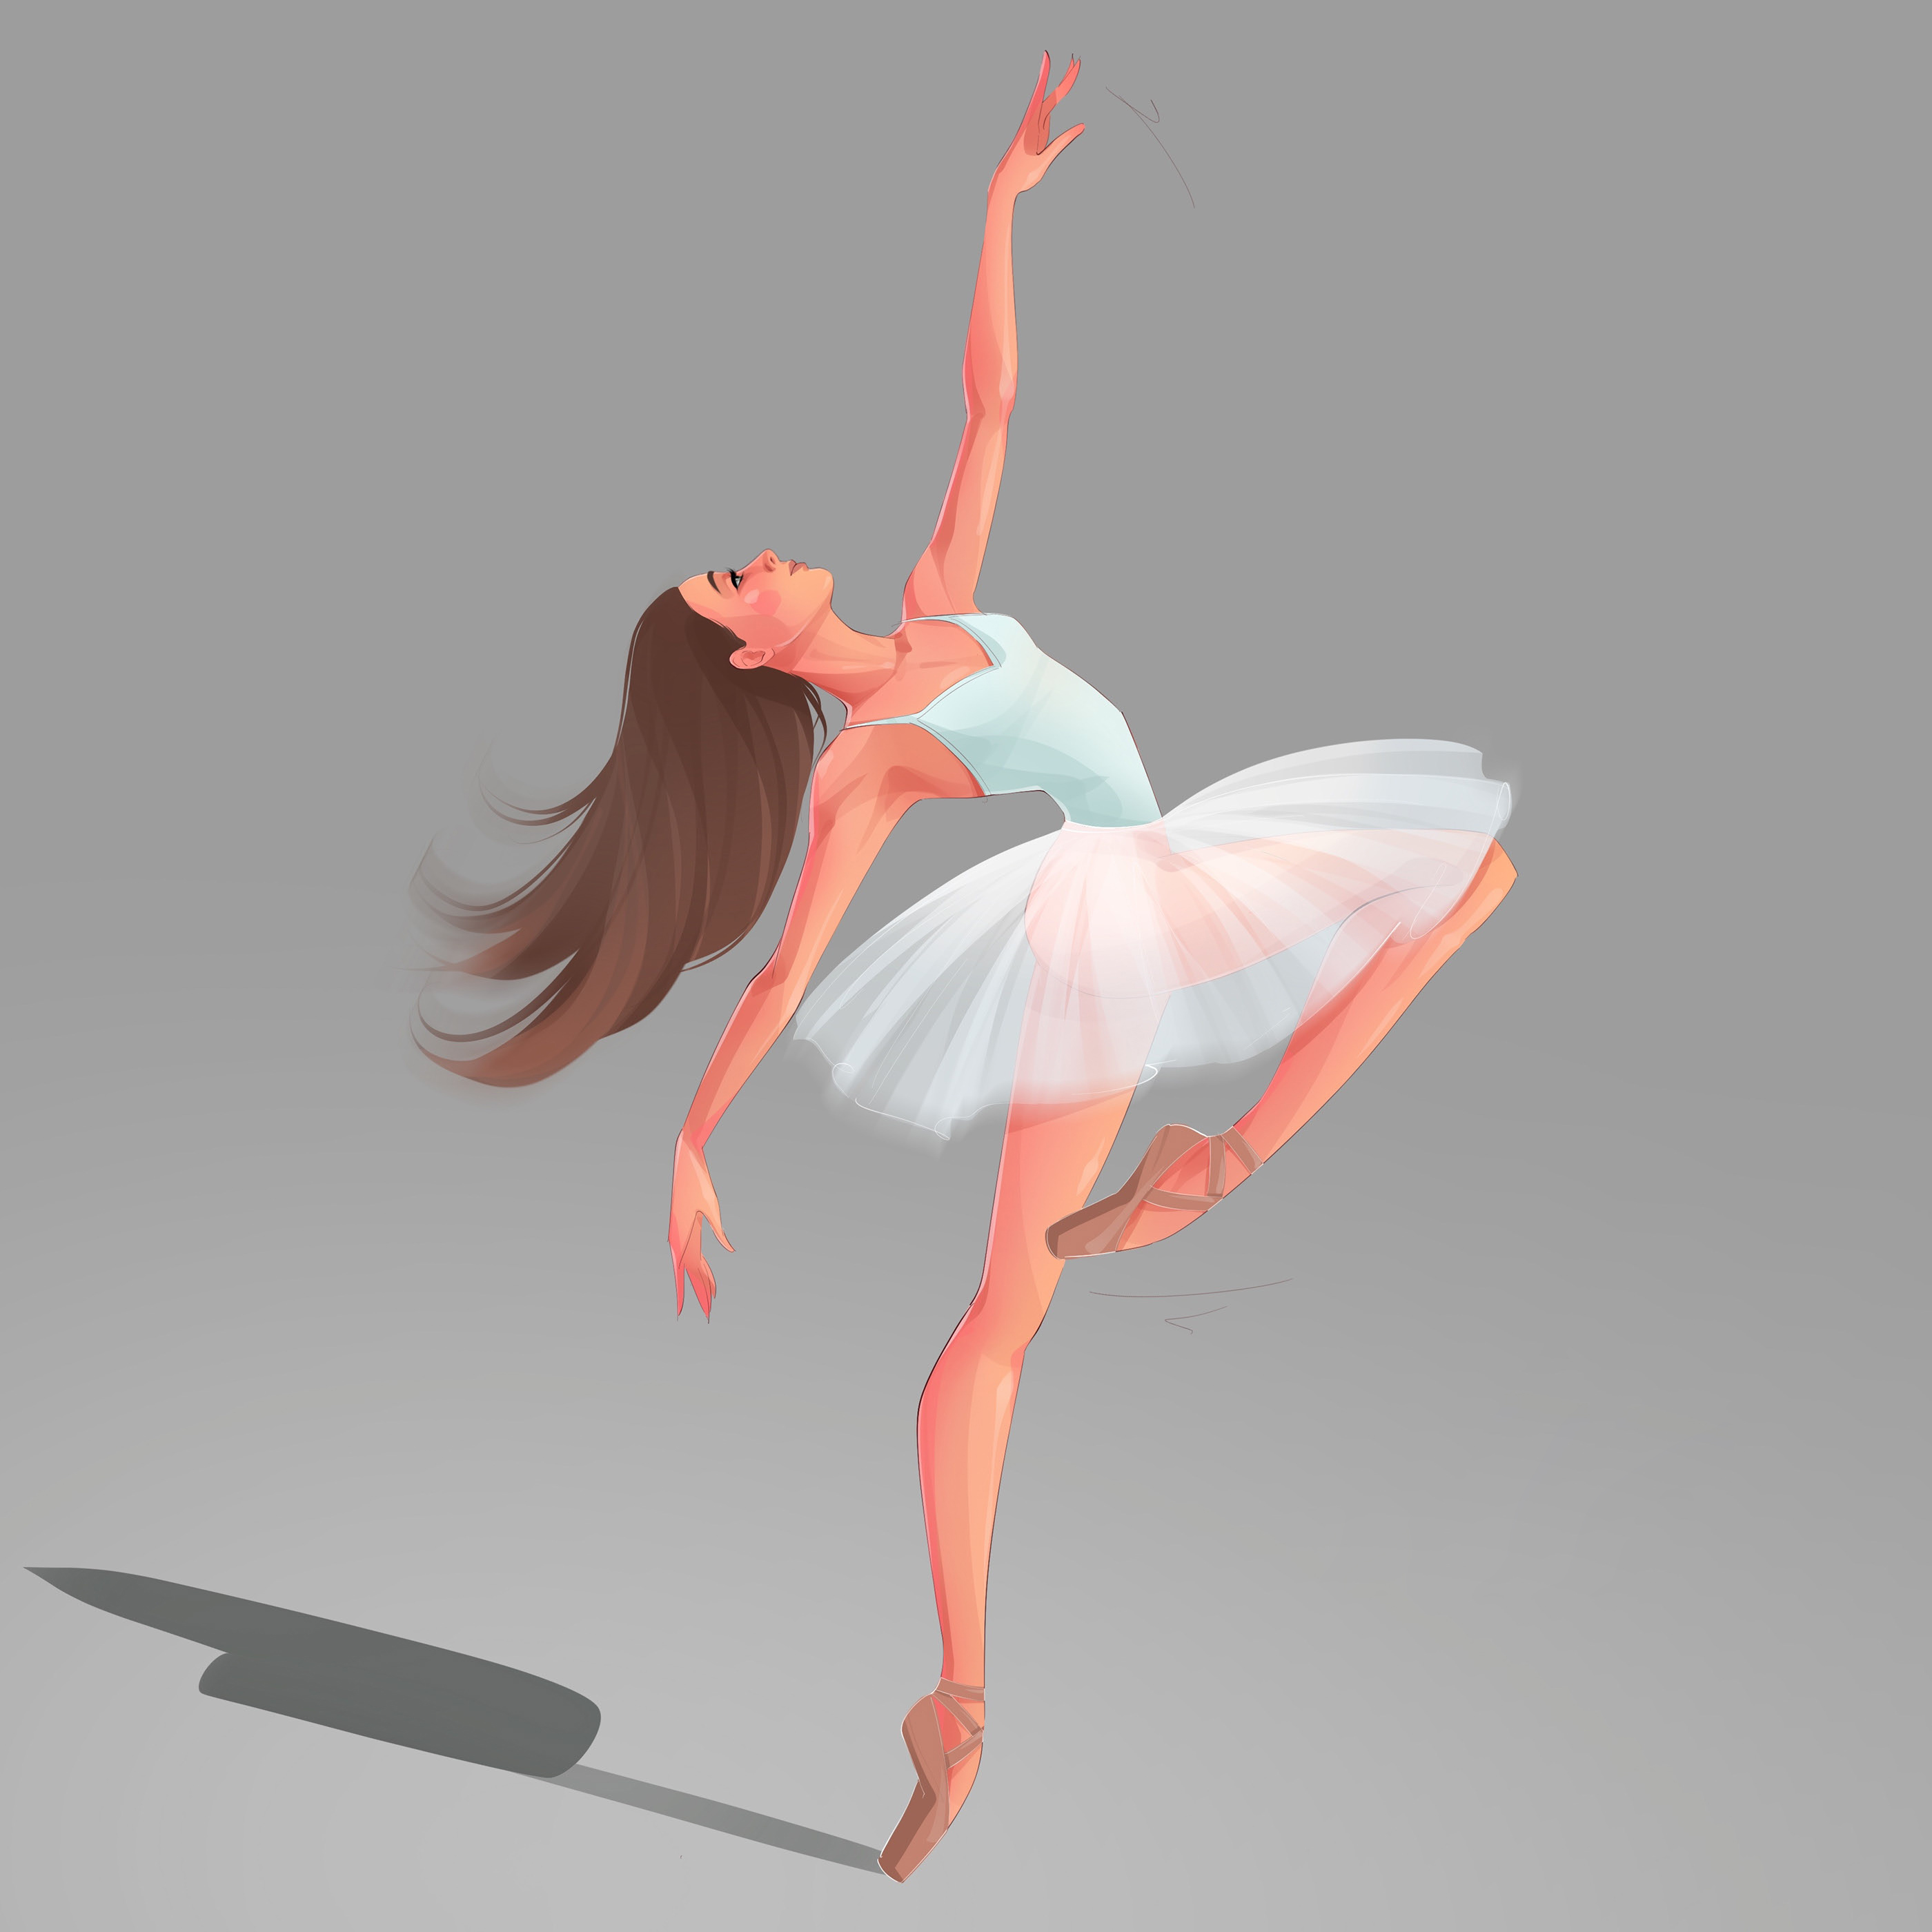 General 2800x2800 stalma.art Marina Stalmakova drawing illustration simple background ballet ballerina